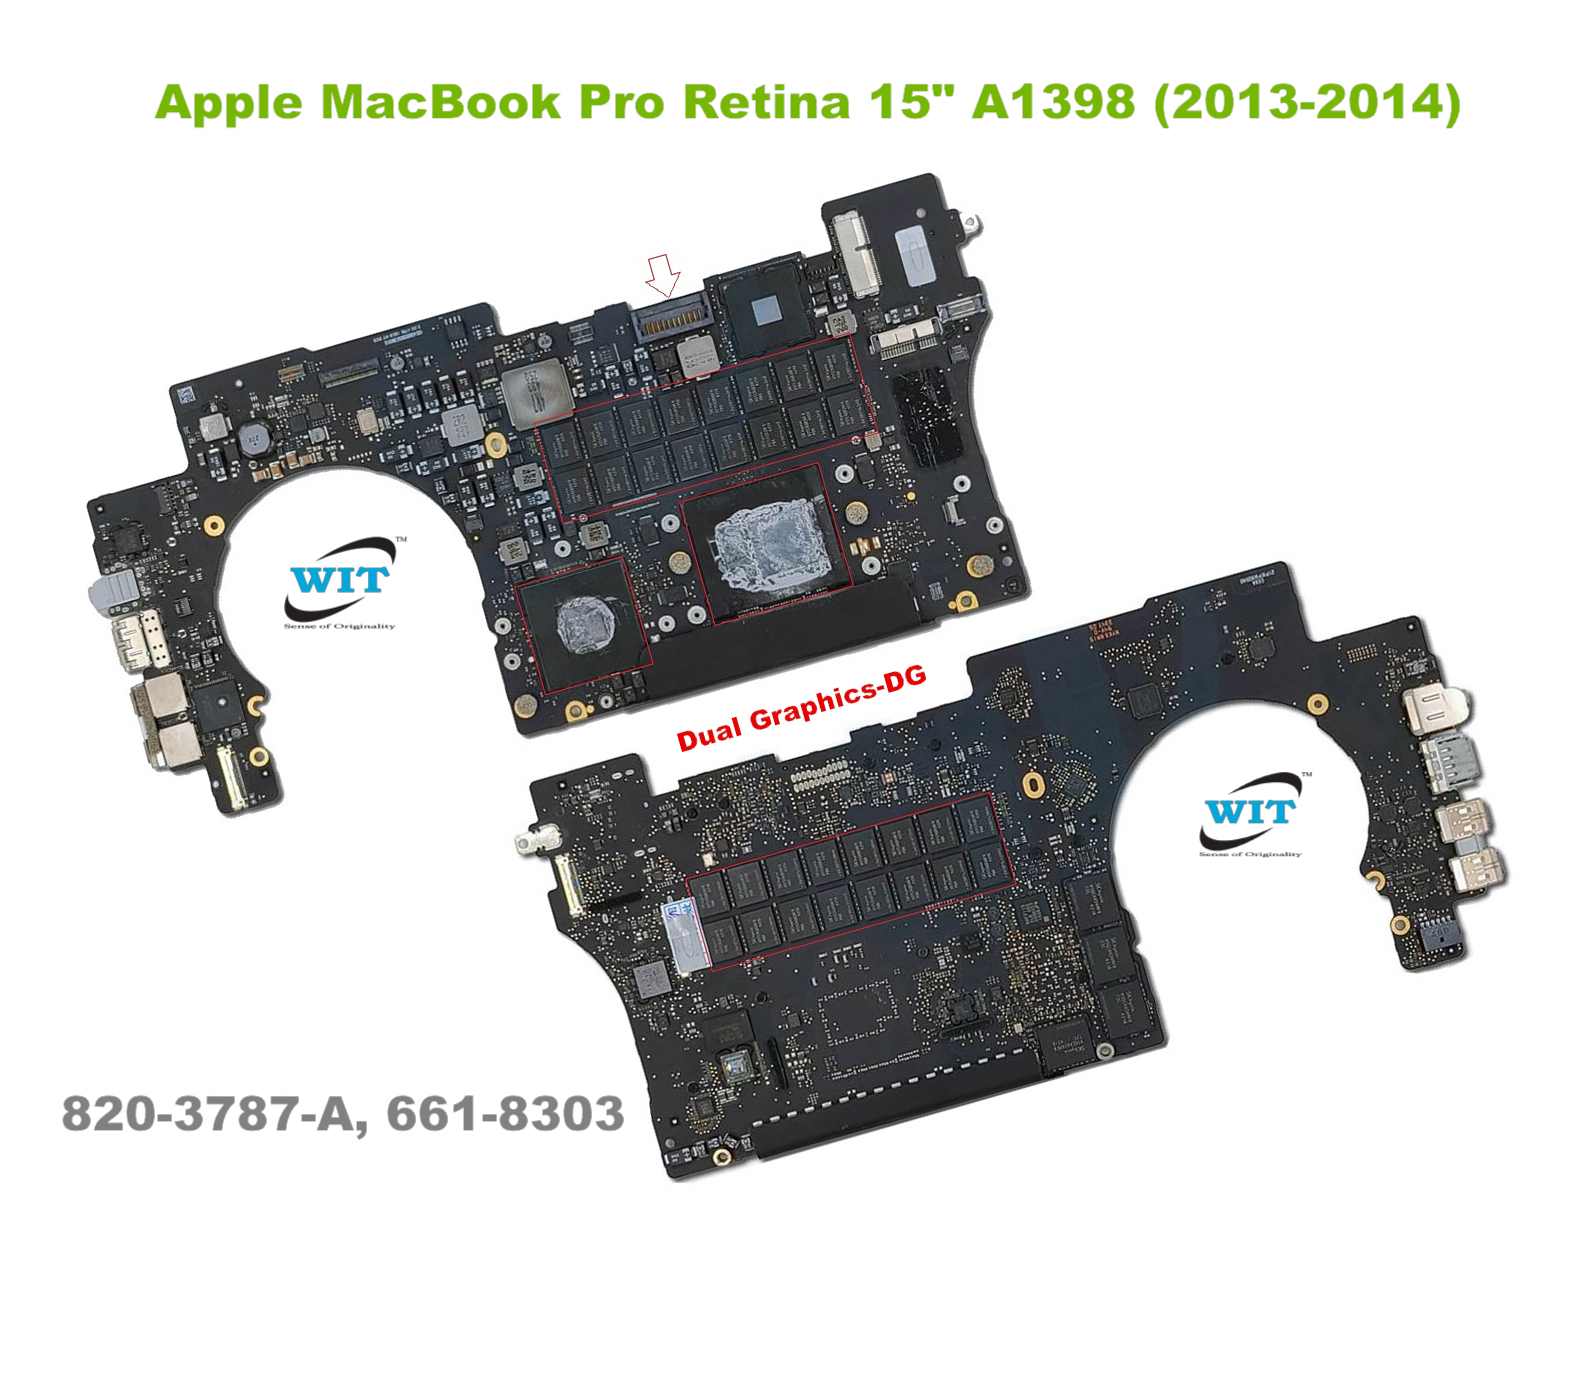 A1398 Logicboard, 820-3787-A, 661-8303 Board for Apple MacBook Pro Retina A1398 2013, Mid 2014 (Dual Graphics-DG) Core i7 2.5Ghz 16GB RAM, EMC #: 2674, 2876 - Computers